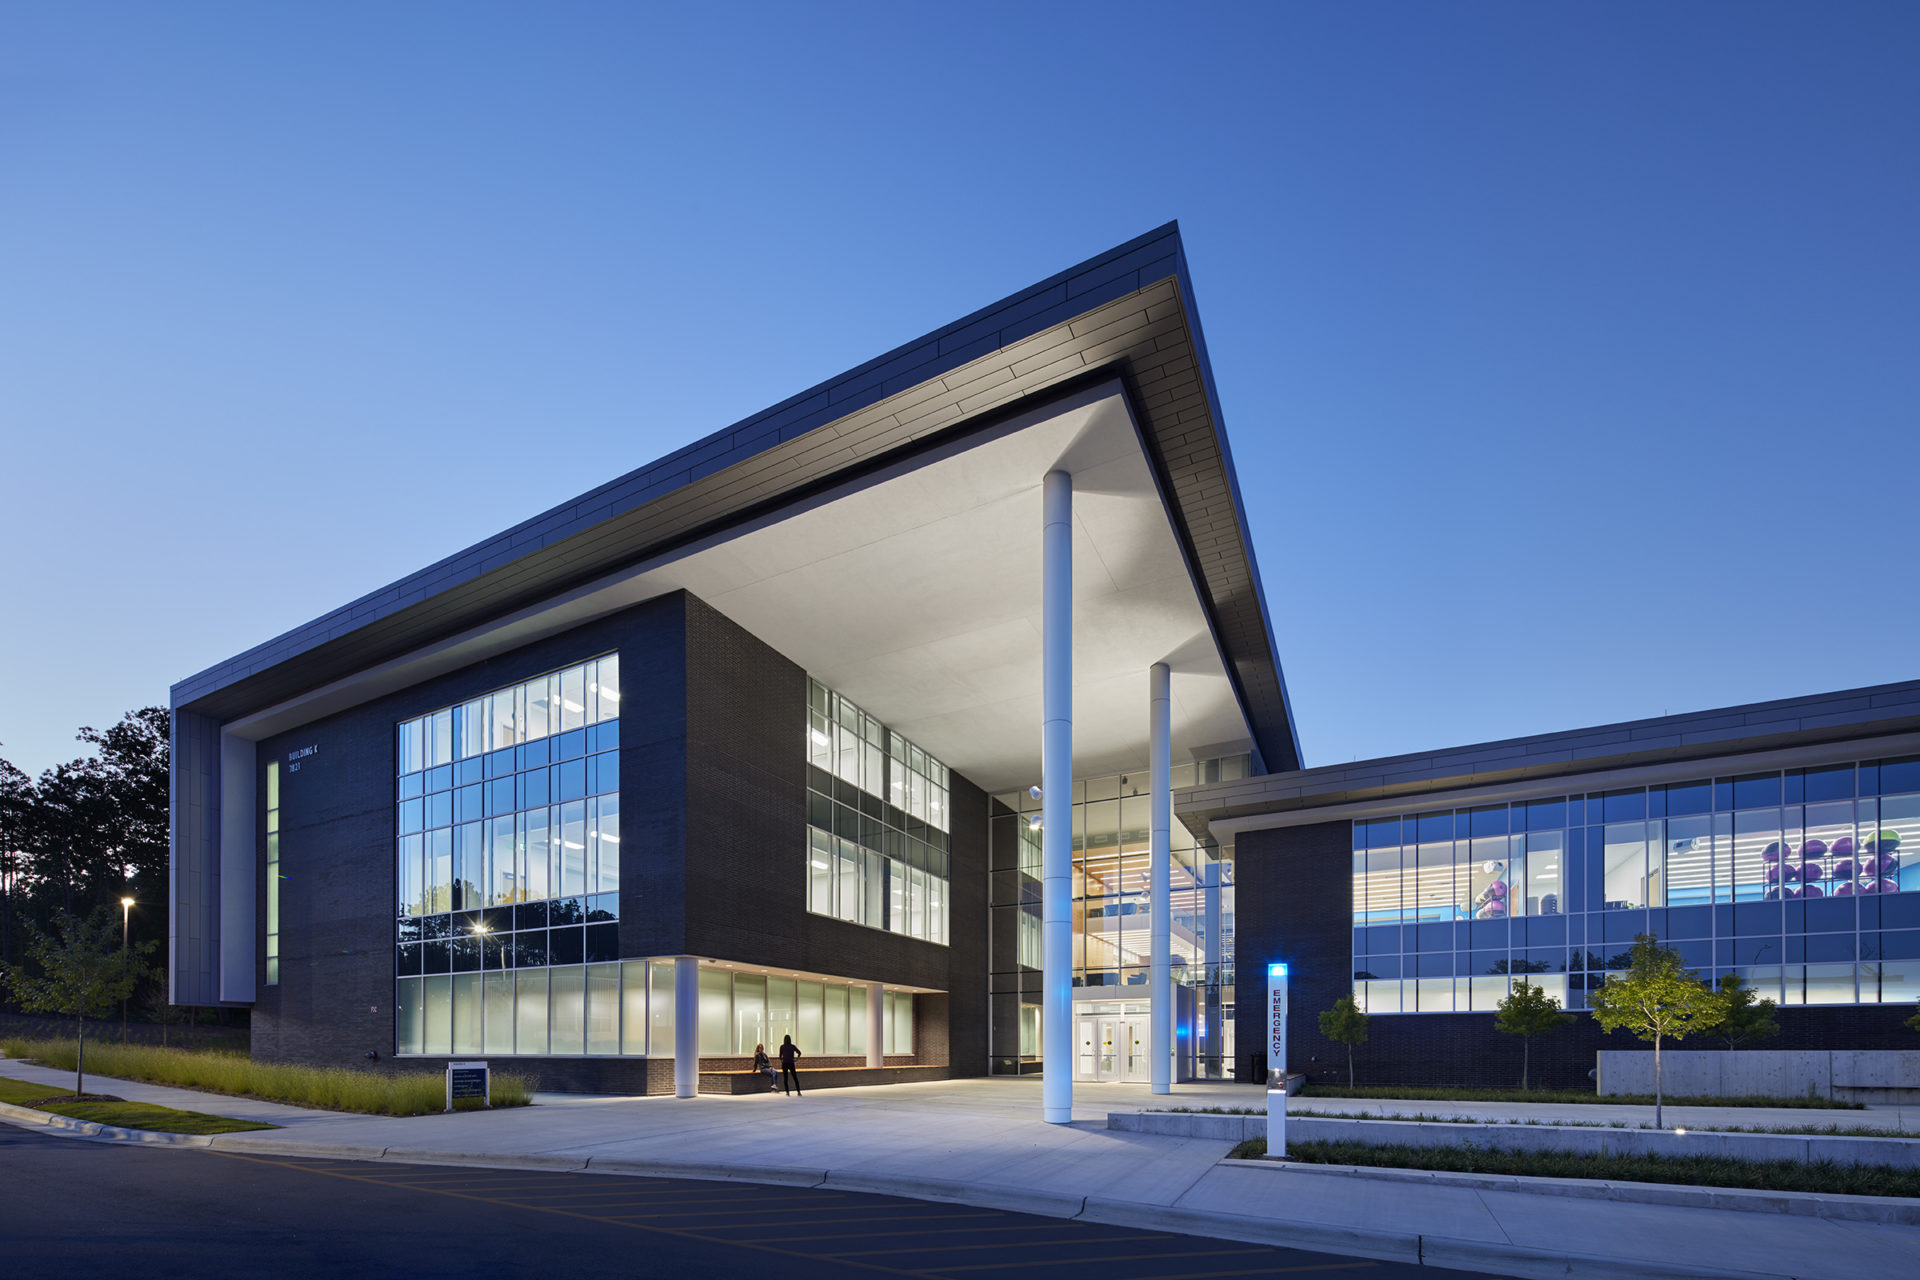 Building-K at Wake Tech in Raleigh, NC; Architect: Clark Nexsen